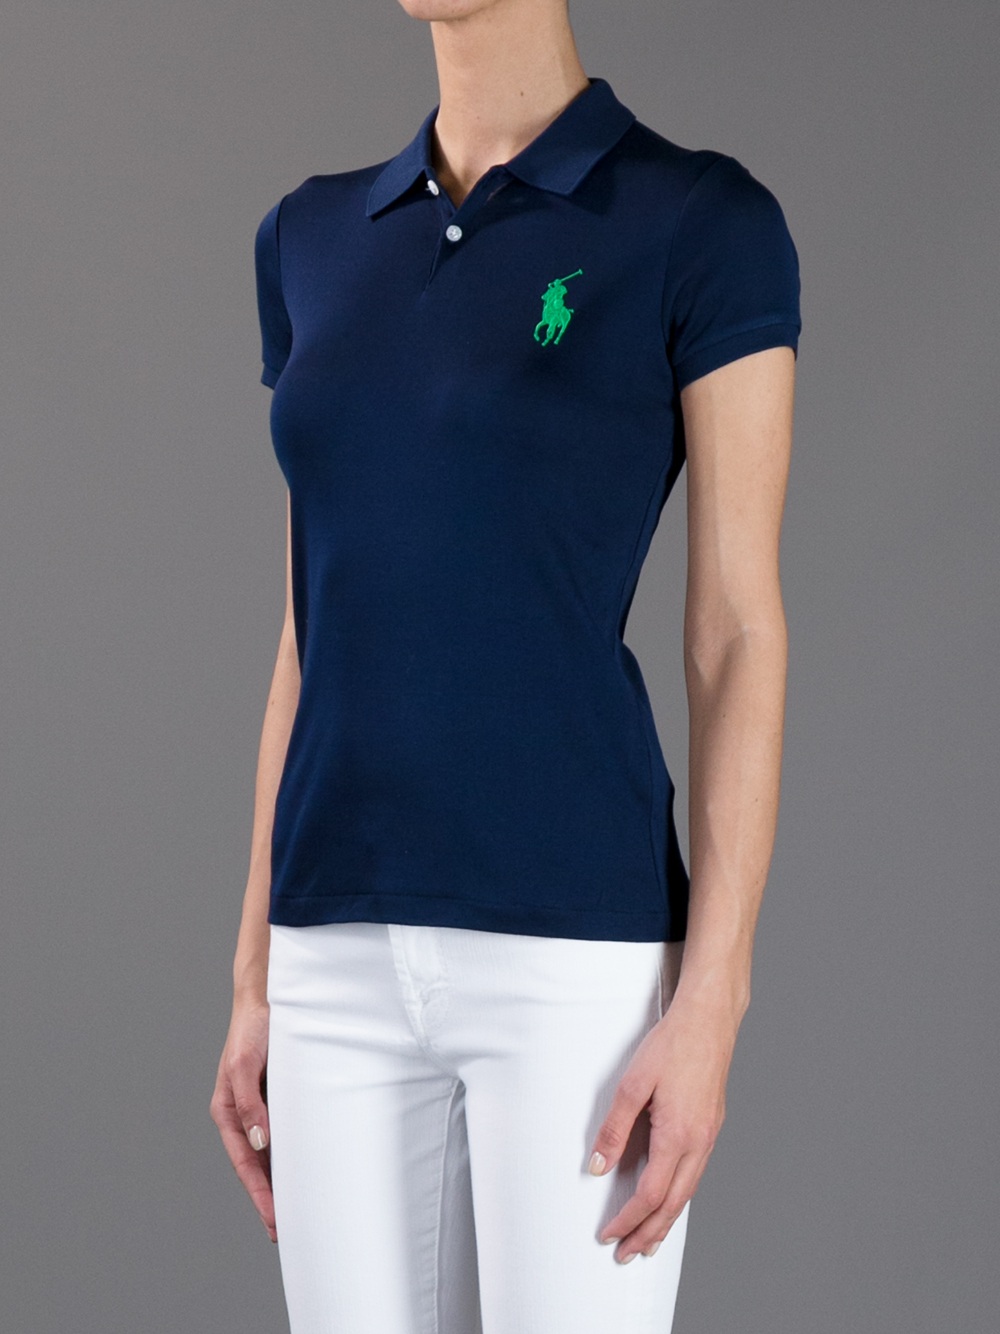 Ralph Lauren Black Label Logo Polo Shirt in Navy (Blue) - Lyst